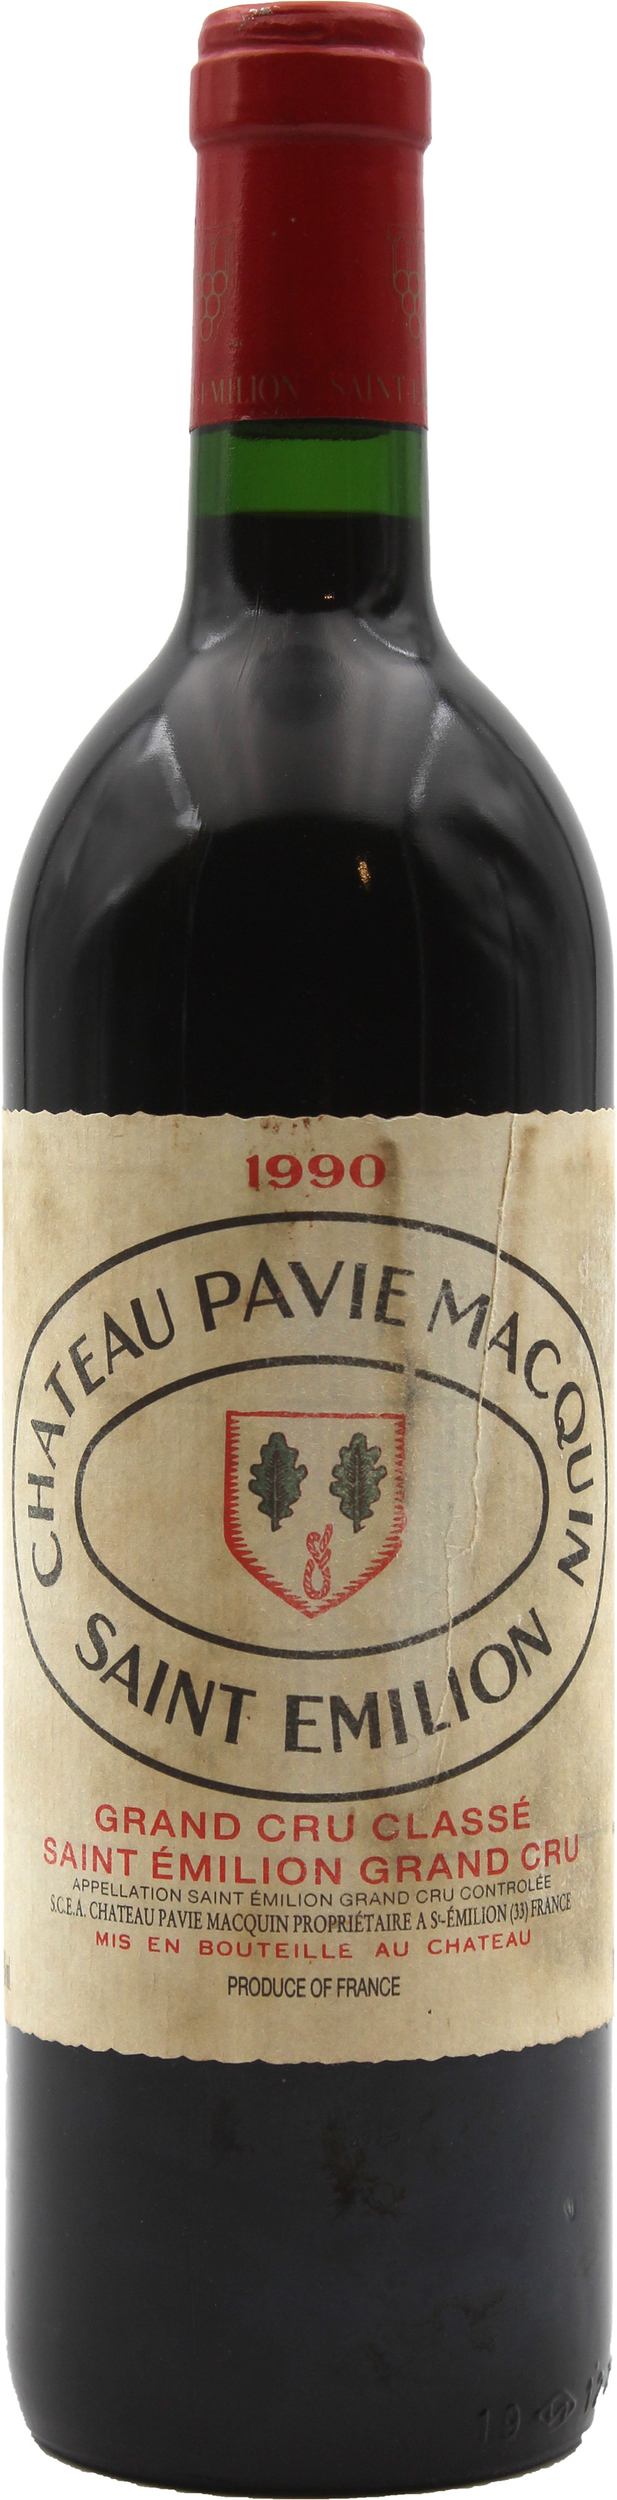 Paviemacquin 1990